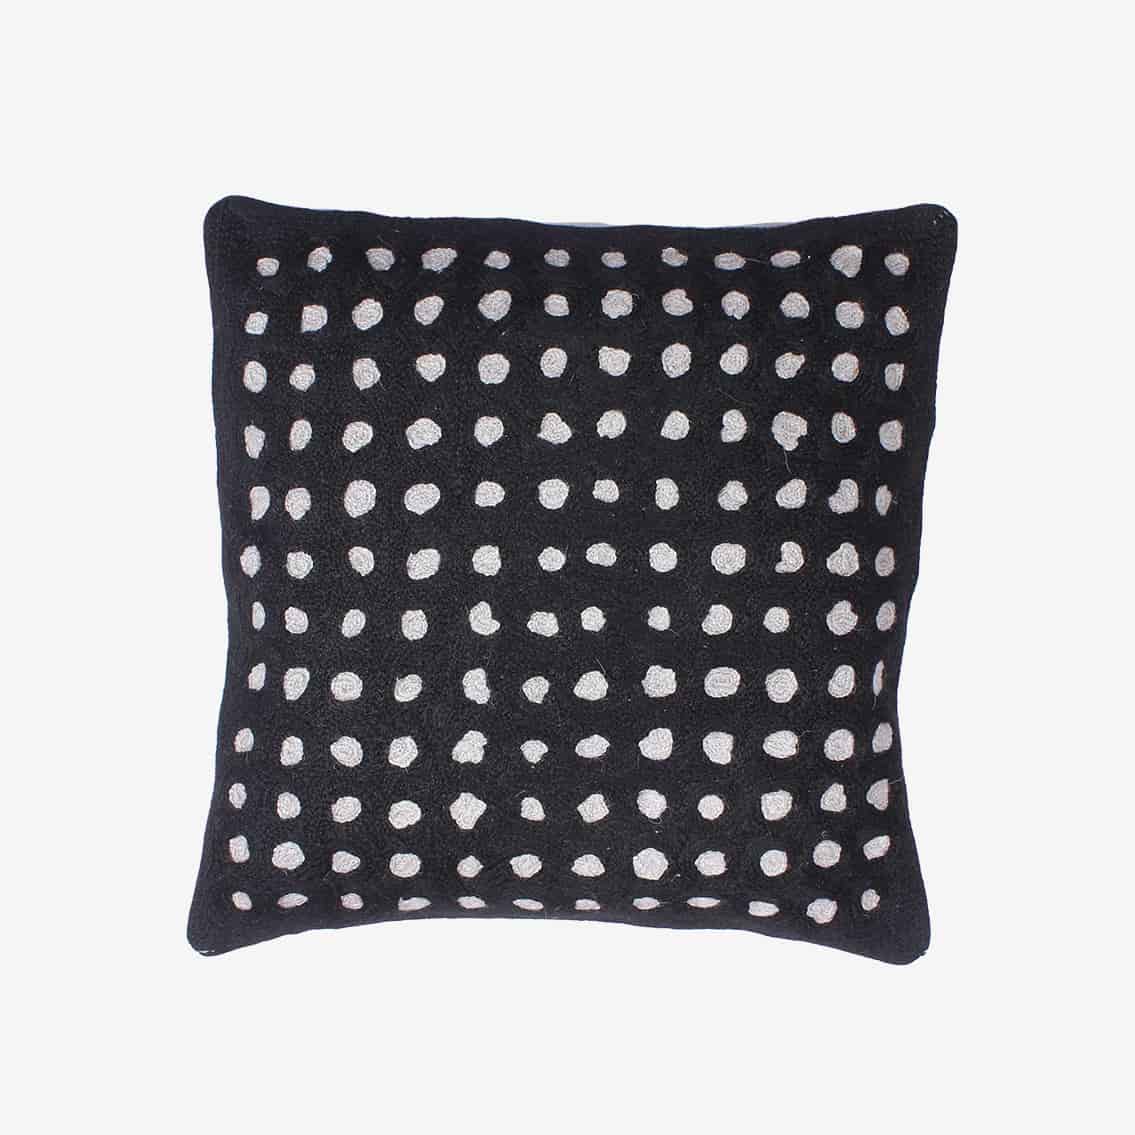 12 Inch Chain Stitch Cushion Cover